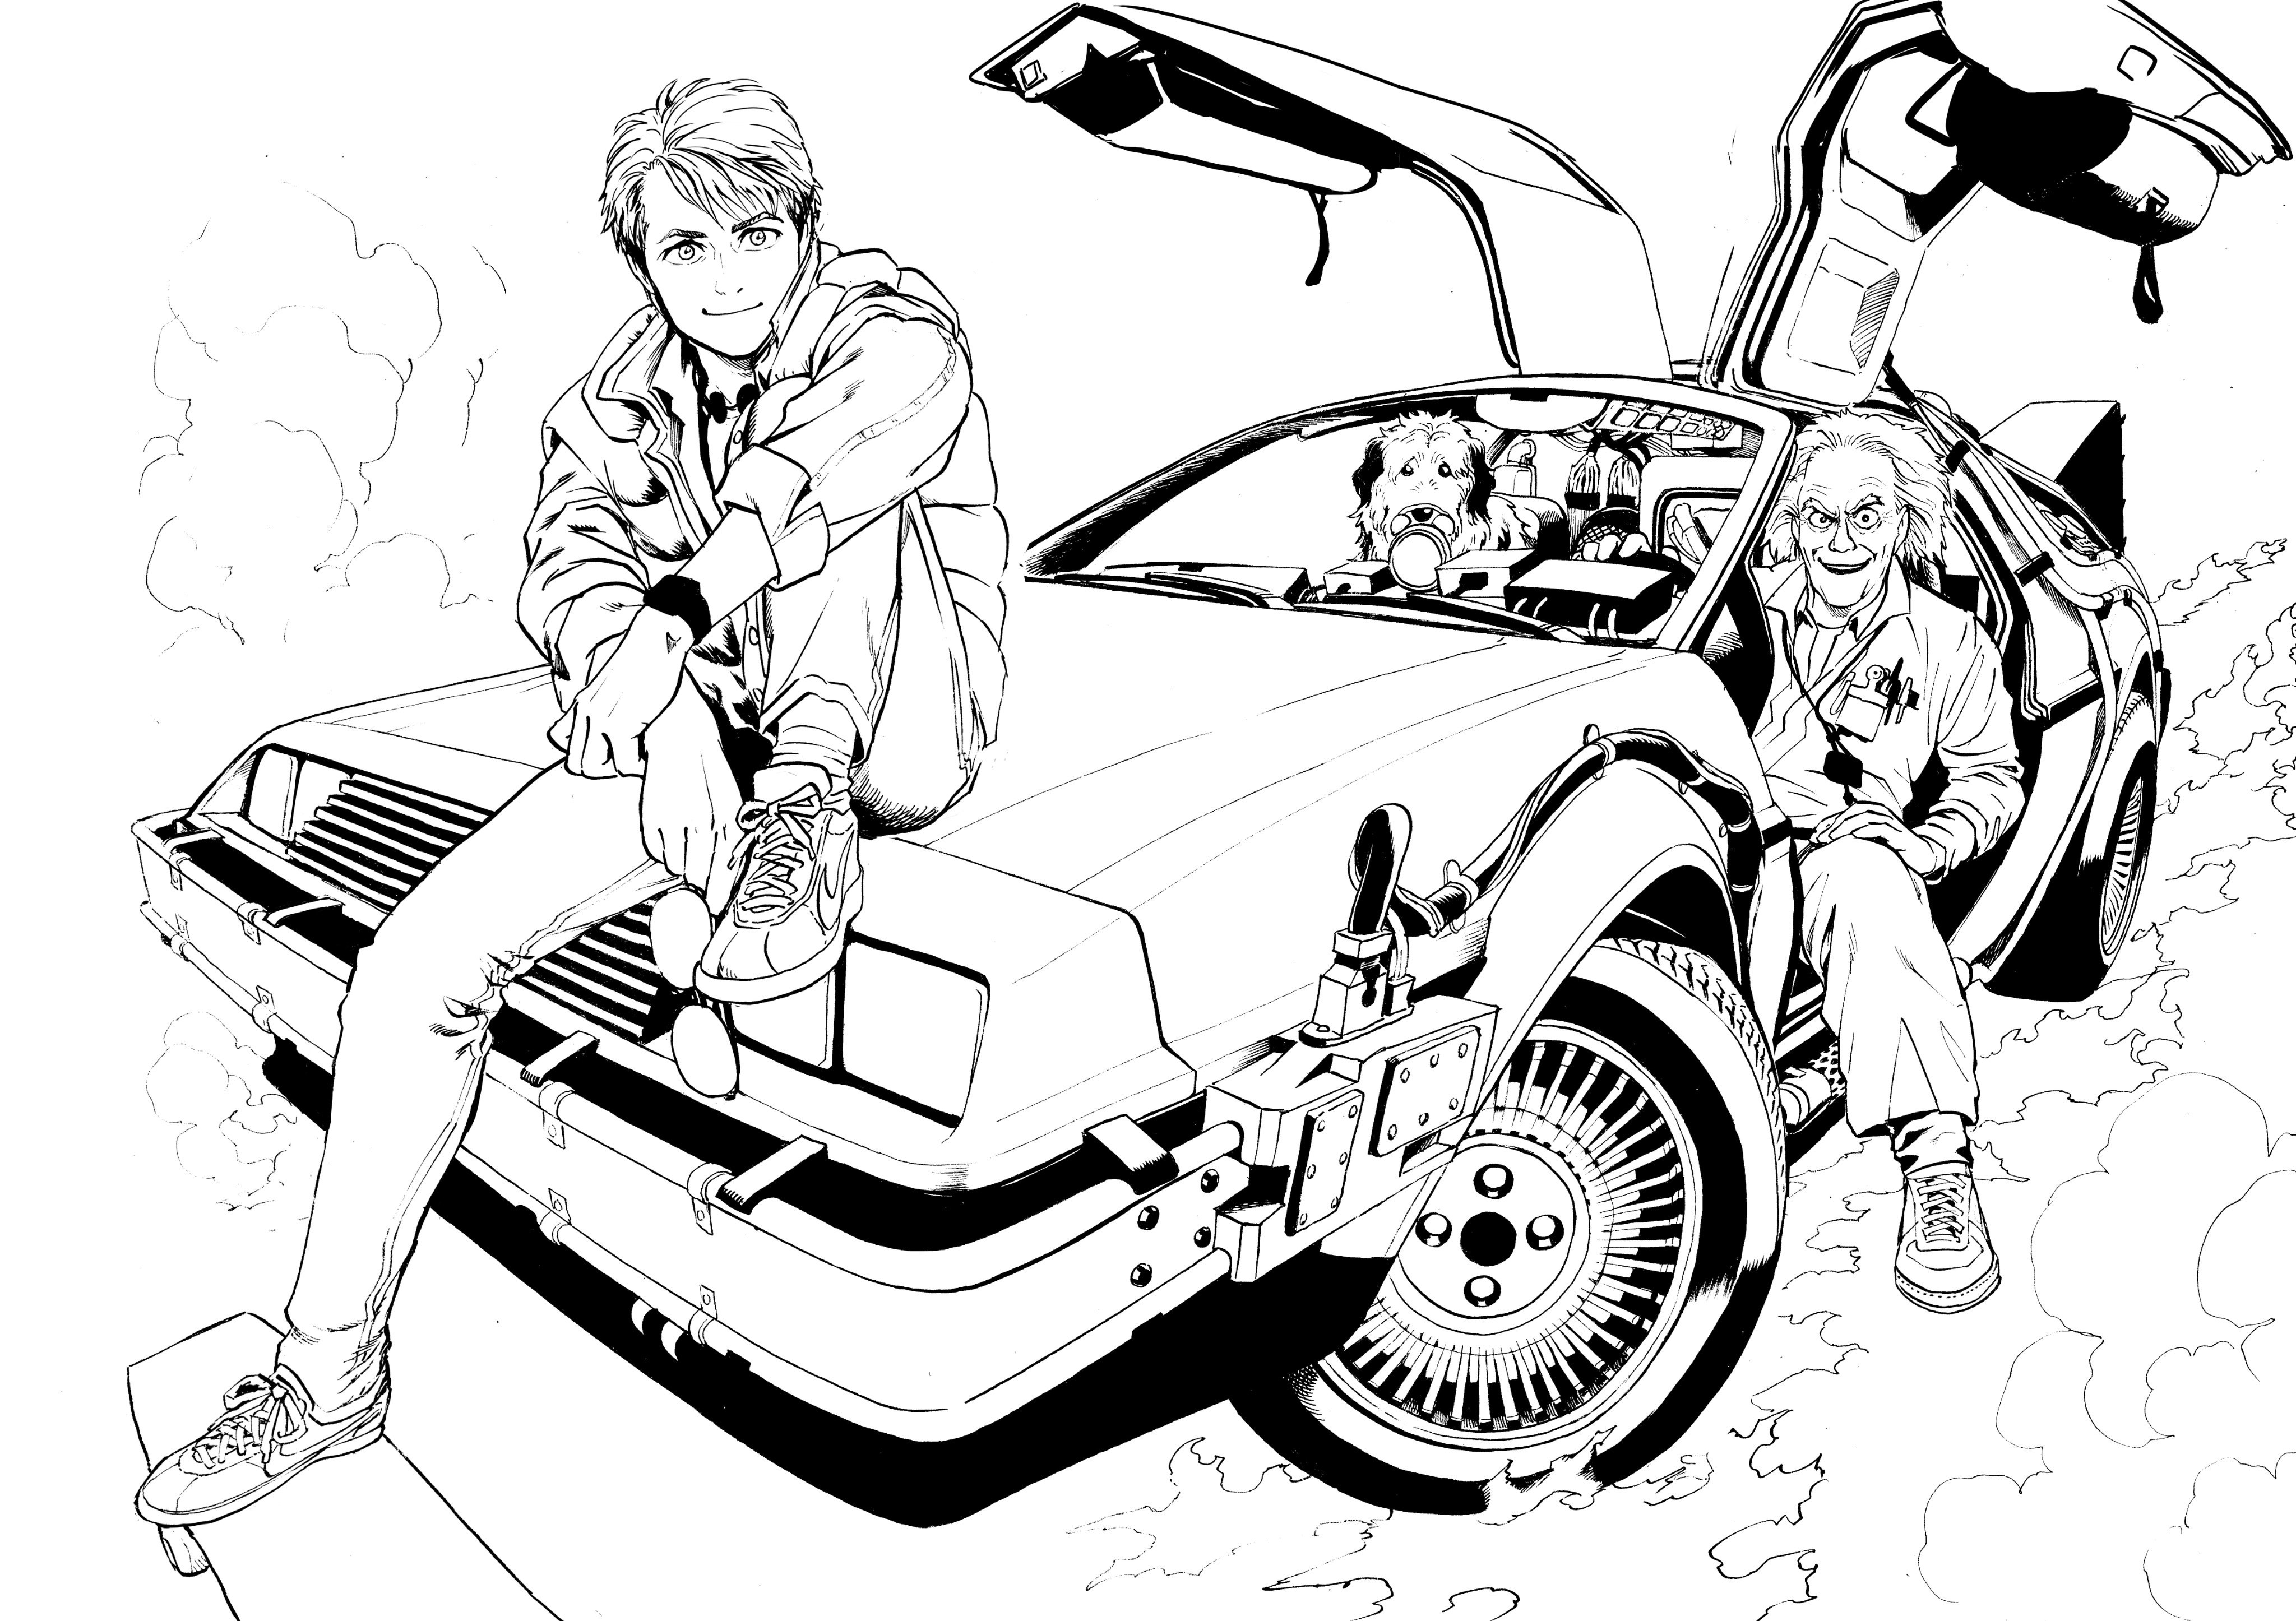 Back To The Future Marty McFly DeLorean DMC DeLorean Car Time Machine Drawn Men Pet Dog Monochrome 4096x2892